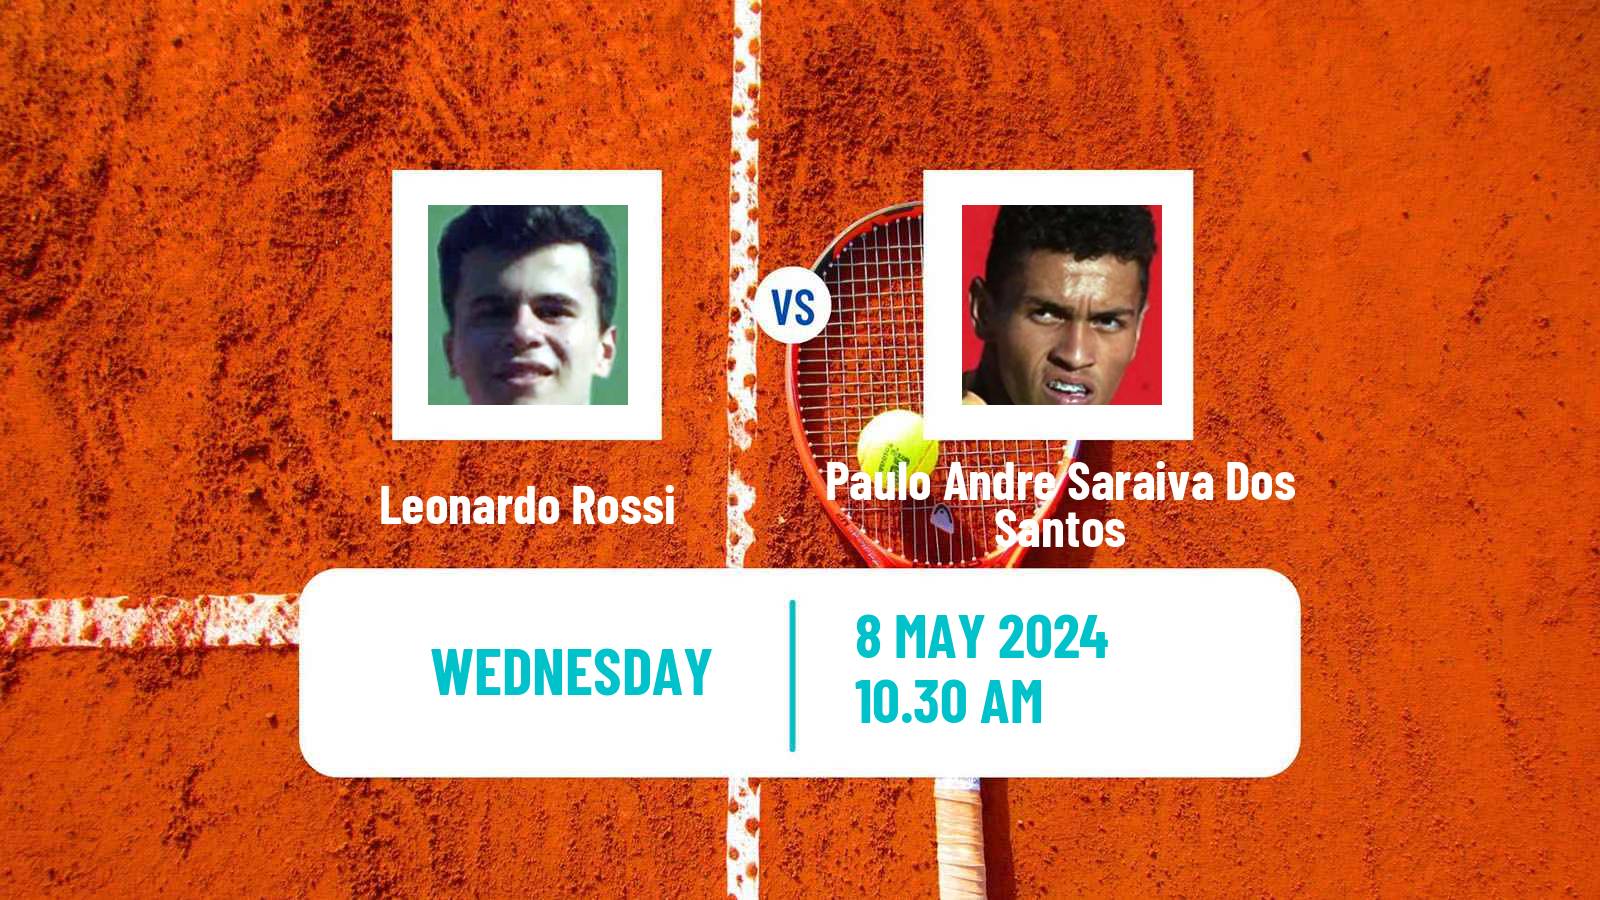 Tennis ITF M15 Monastir 19 Men Leonardo Rossi - Paulo Andre Saraiva Dos Santos